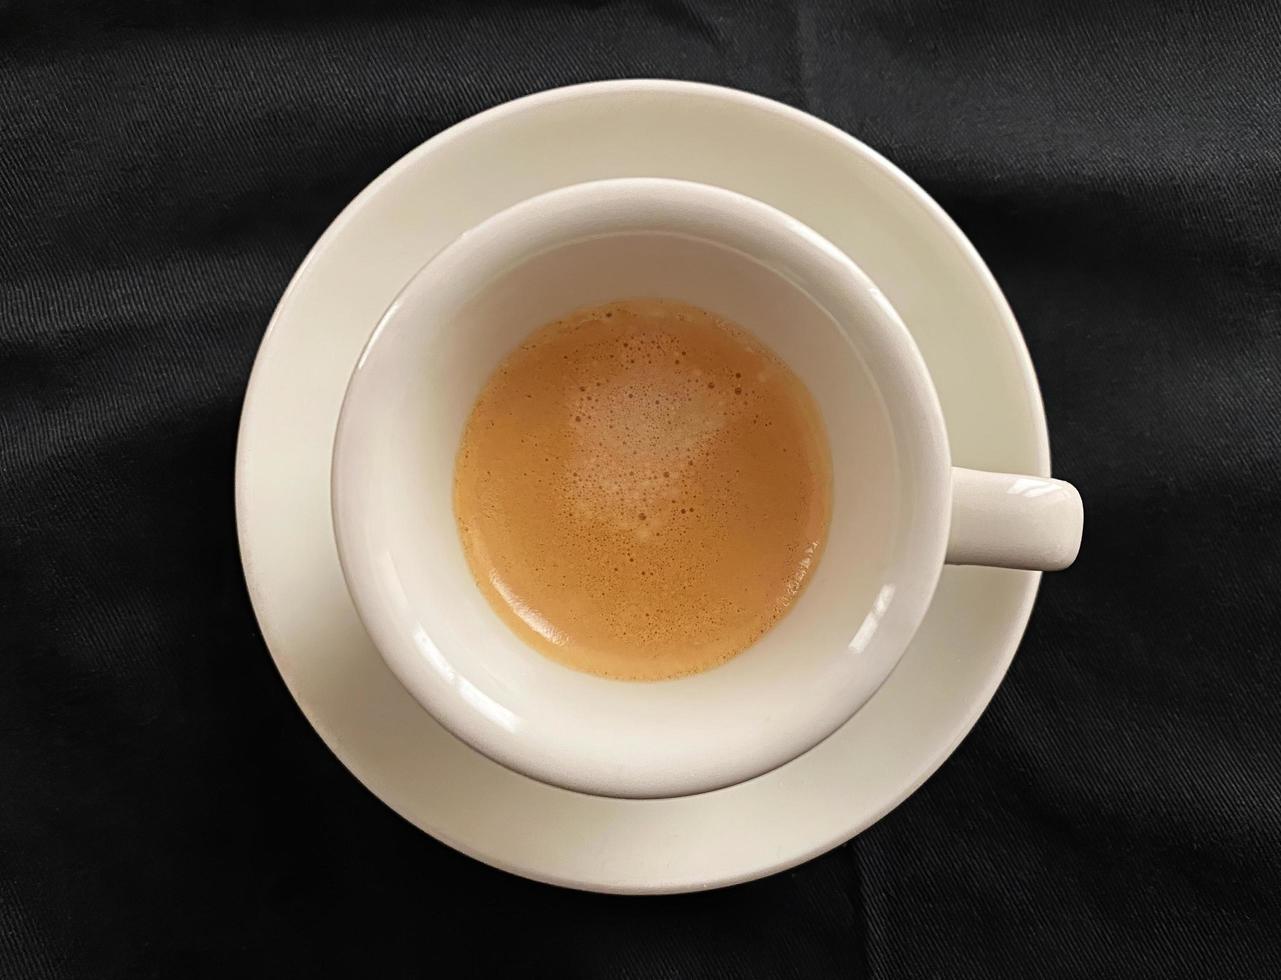 café espresso italiano sobre fondo oscuro. vista superior. foto